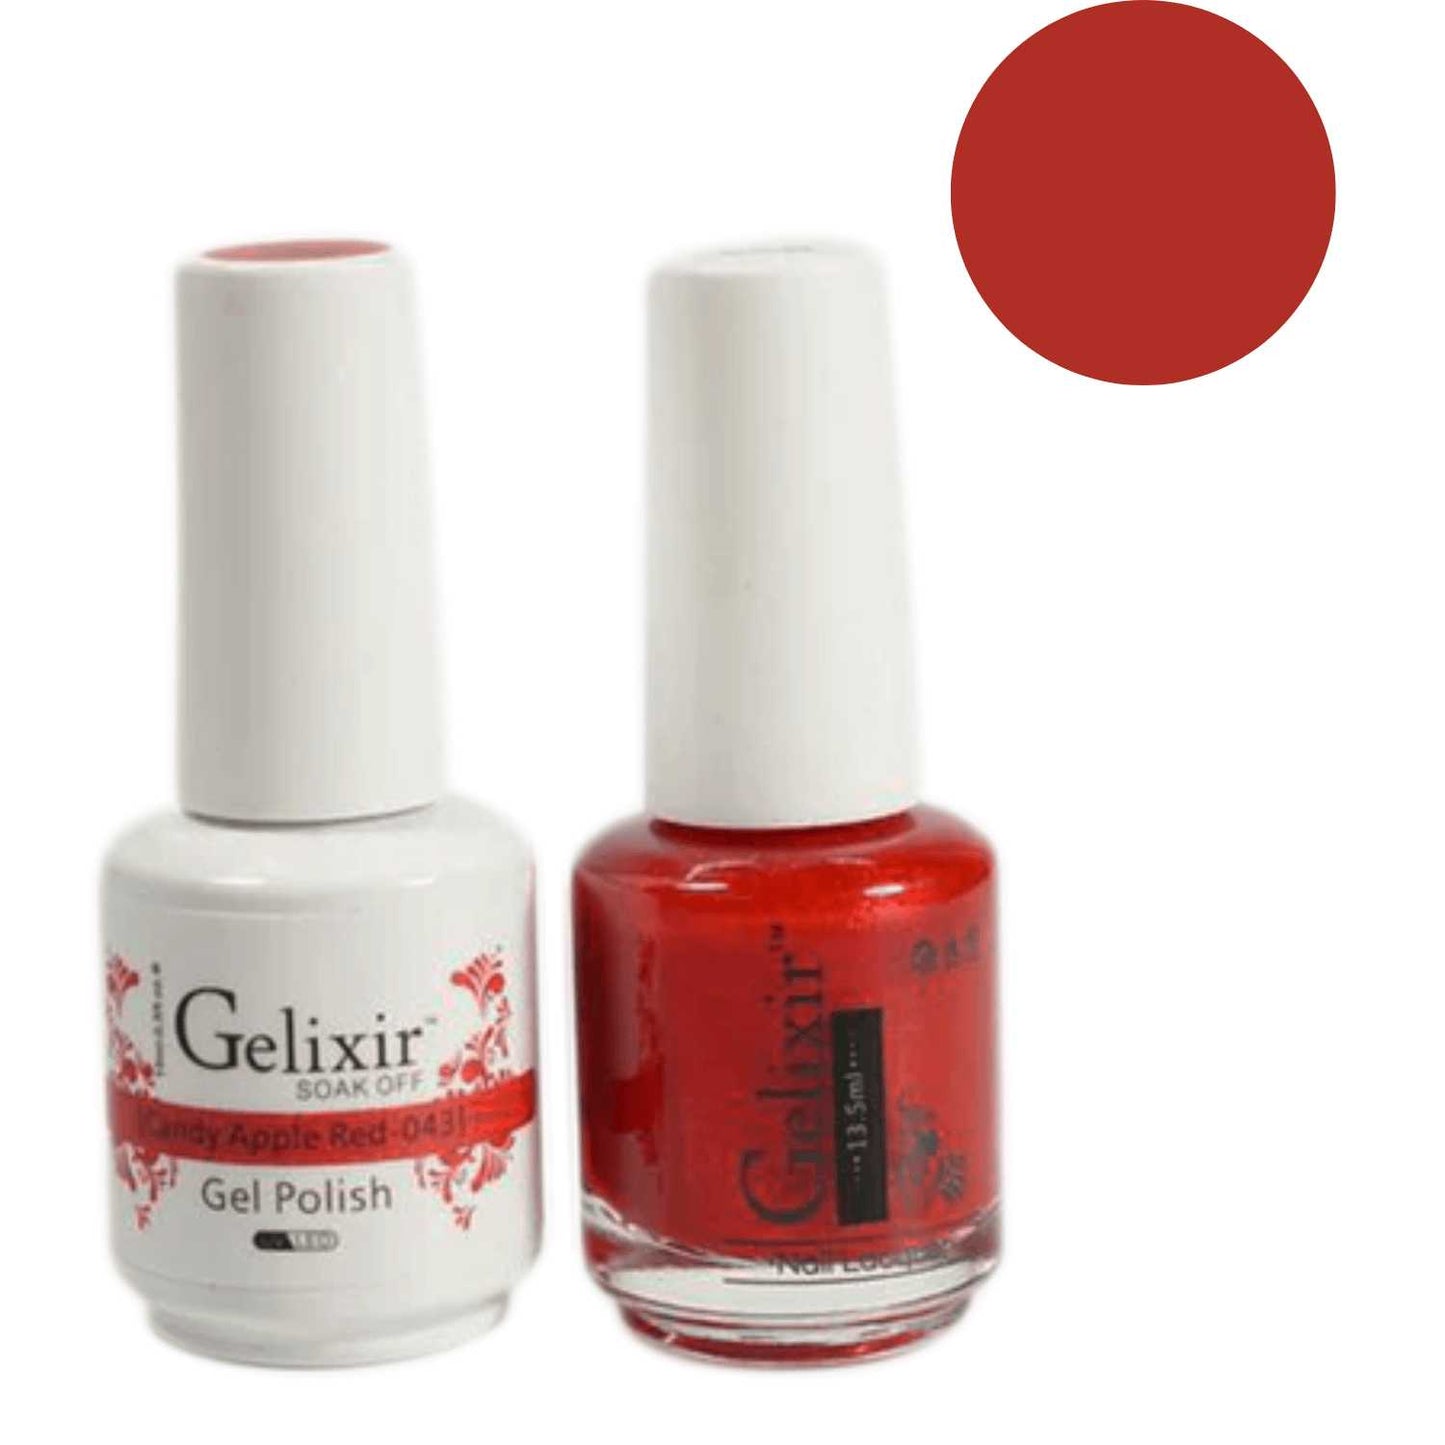 Gelixir Gel Polish & Nail Lacquer Duo Candy Apple Red - #43 Gelixir